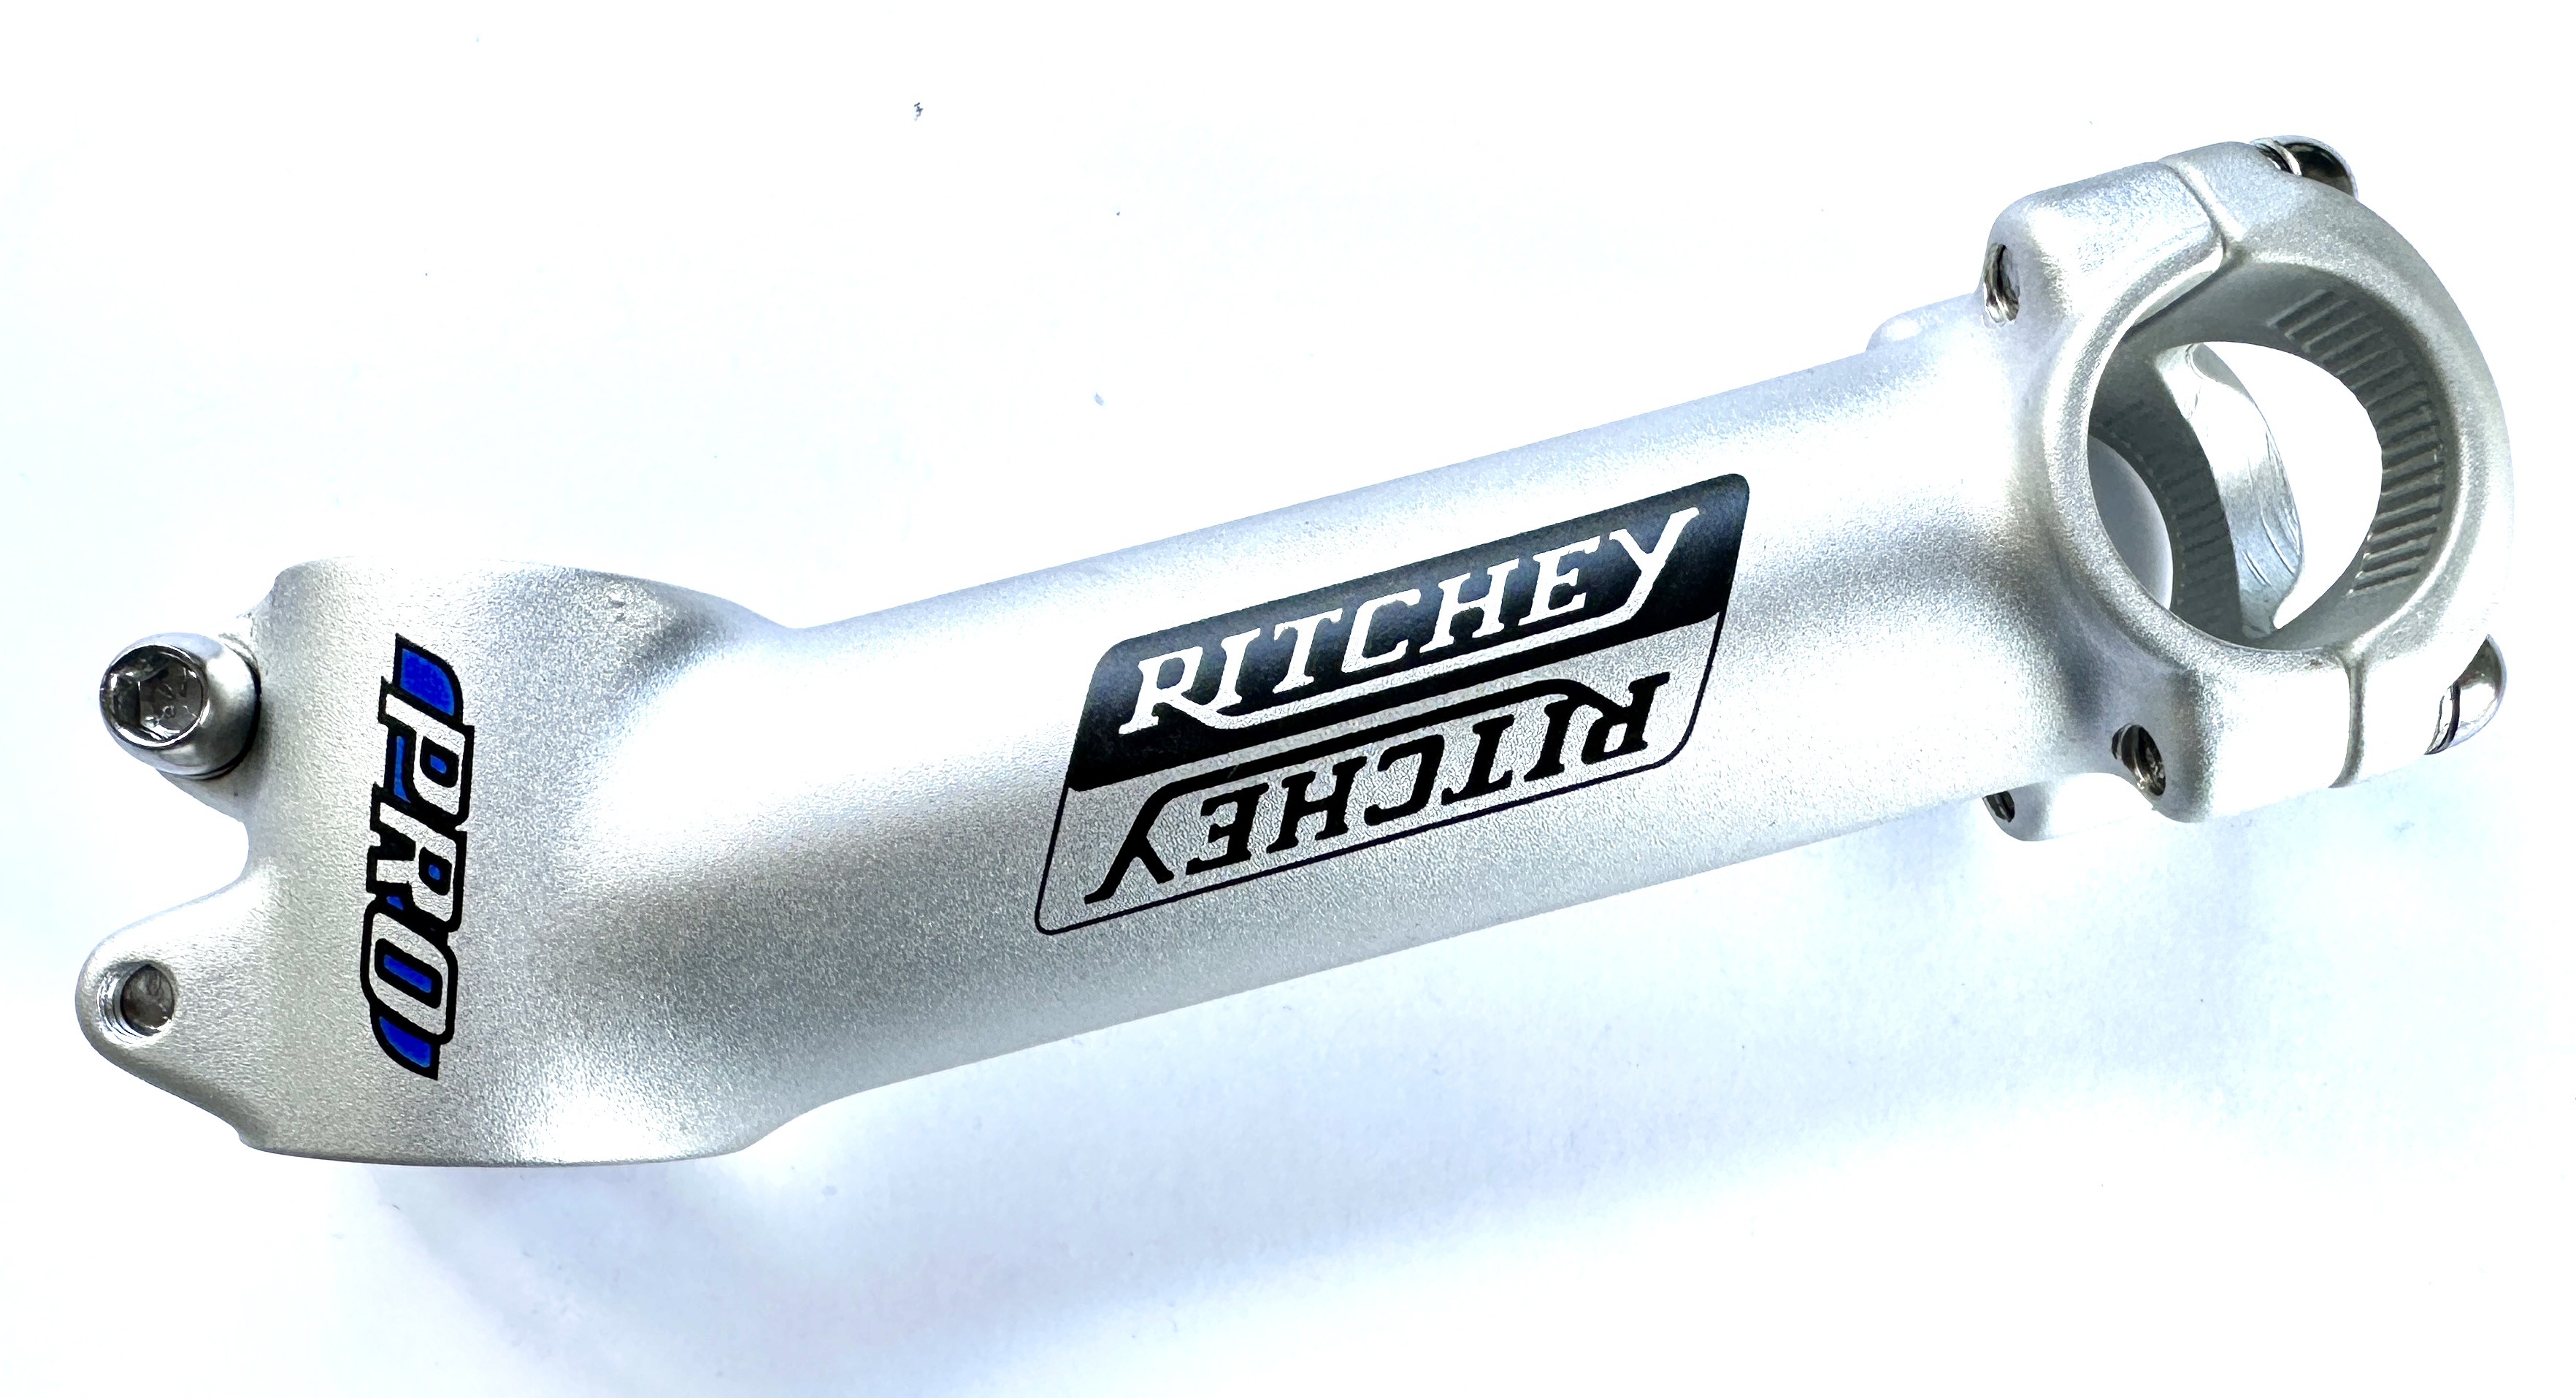 Ritchey Pro Potencia Potencia de aluminio: montaje en manillar de 1 1/8 1 pulgada Conexión de tornillo de 4 vías